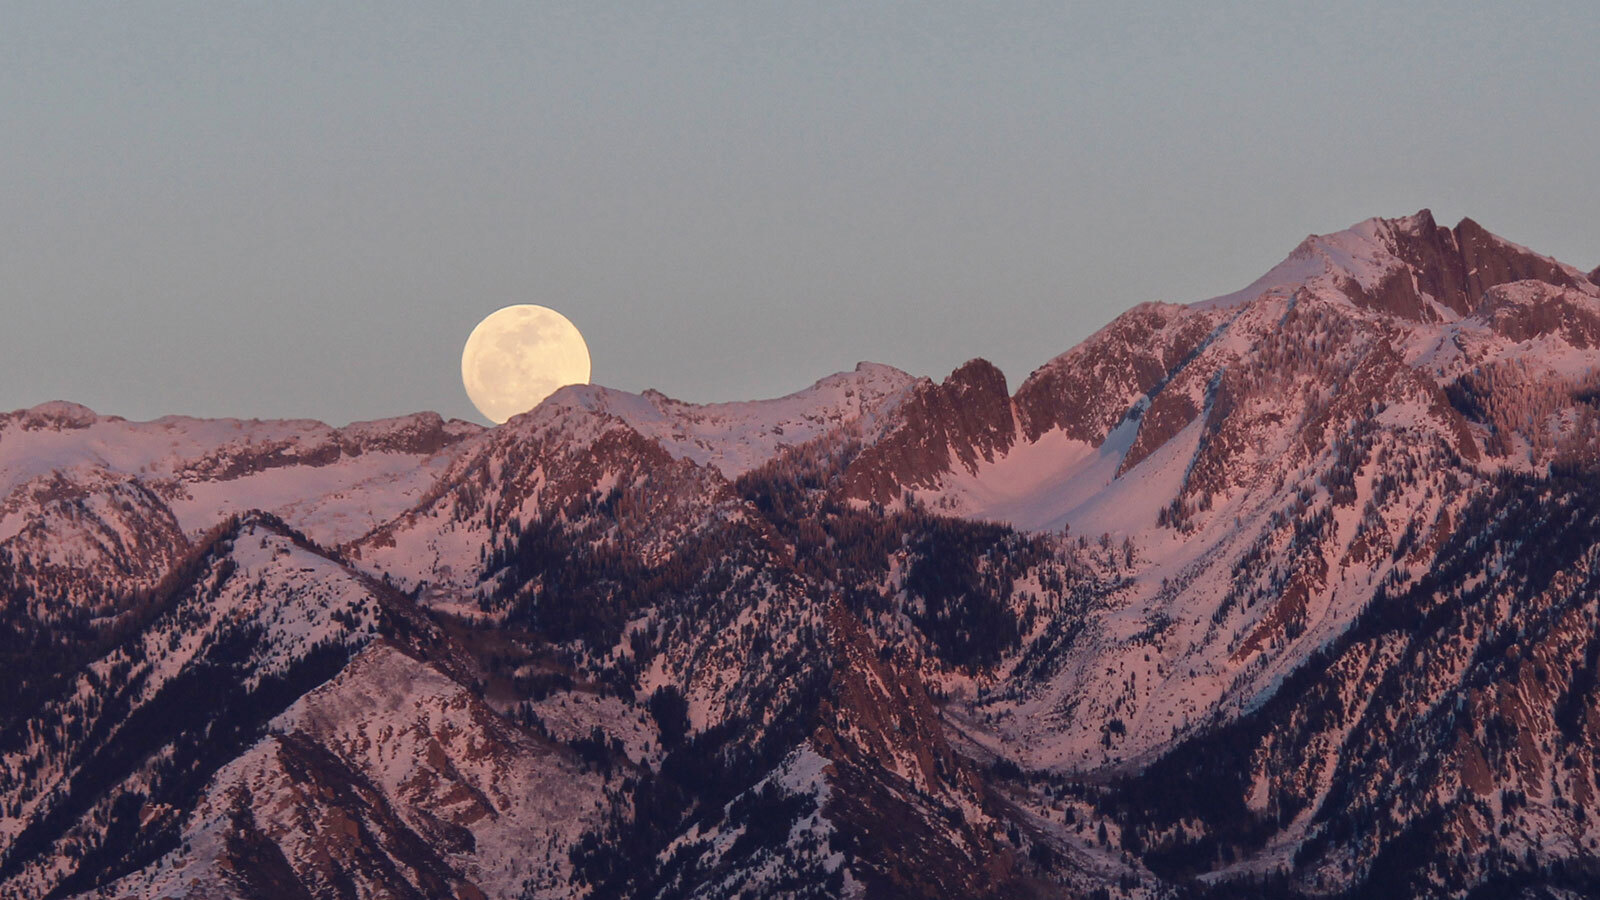 Moon rising over mountain peaks.